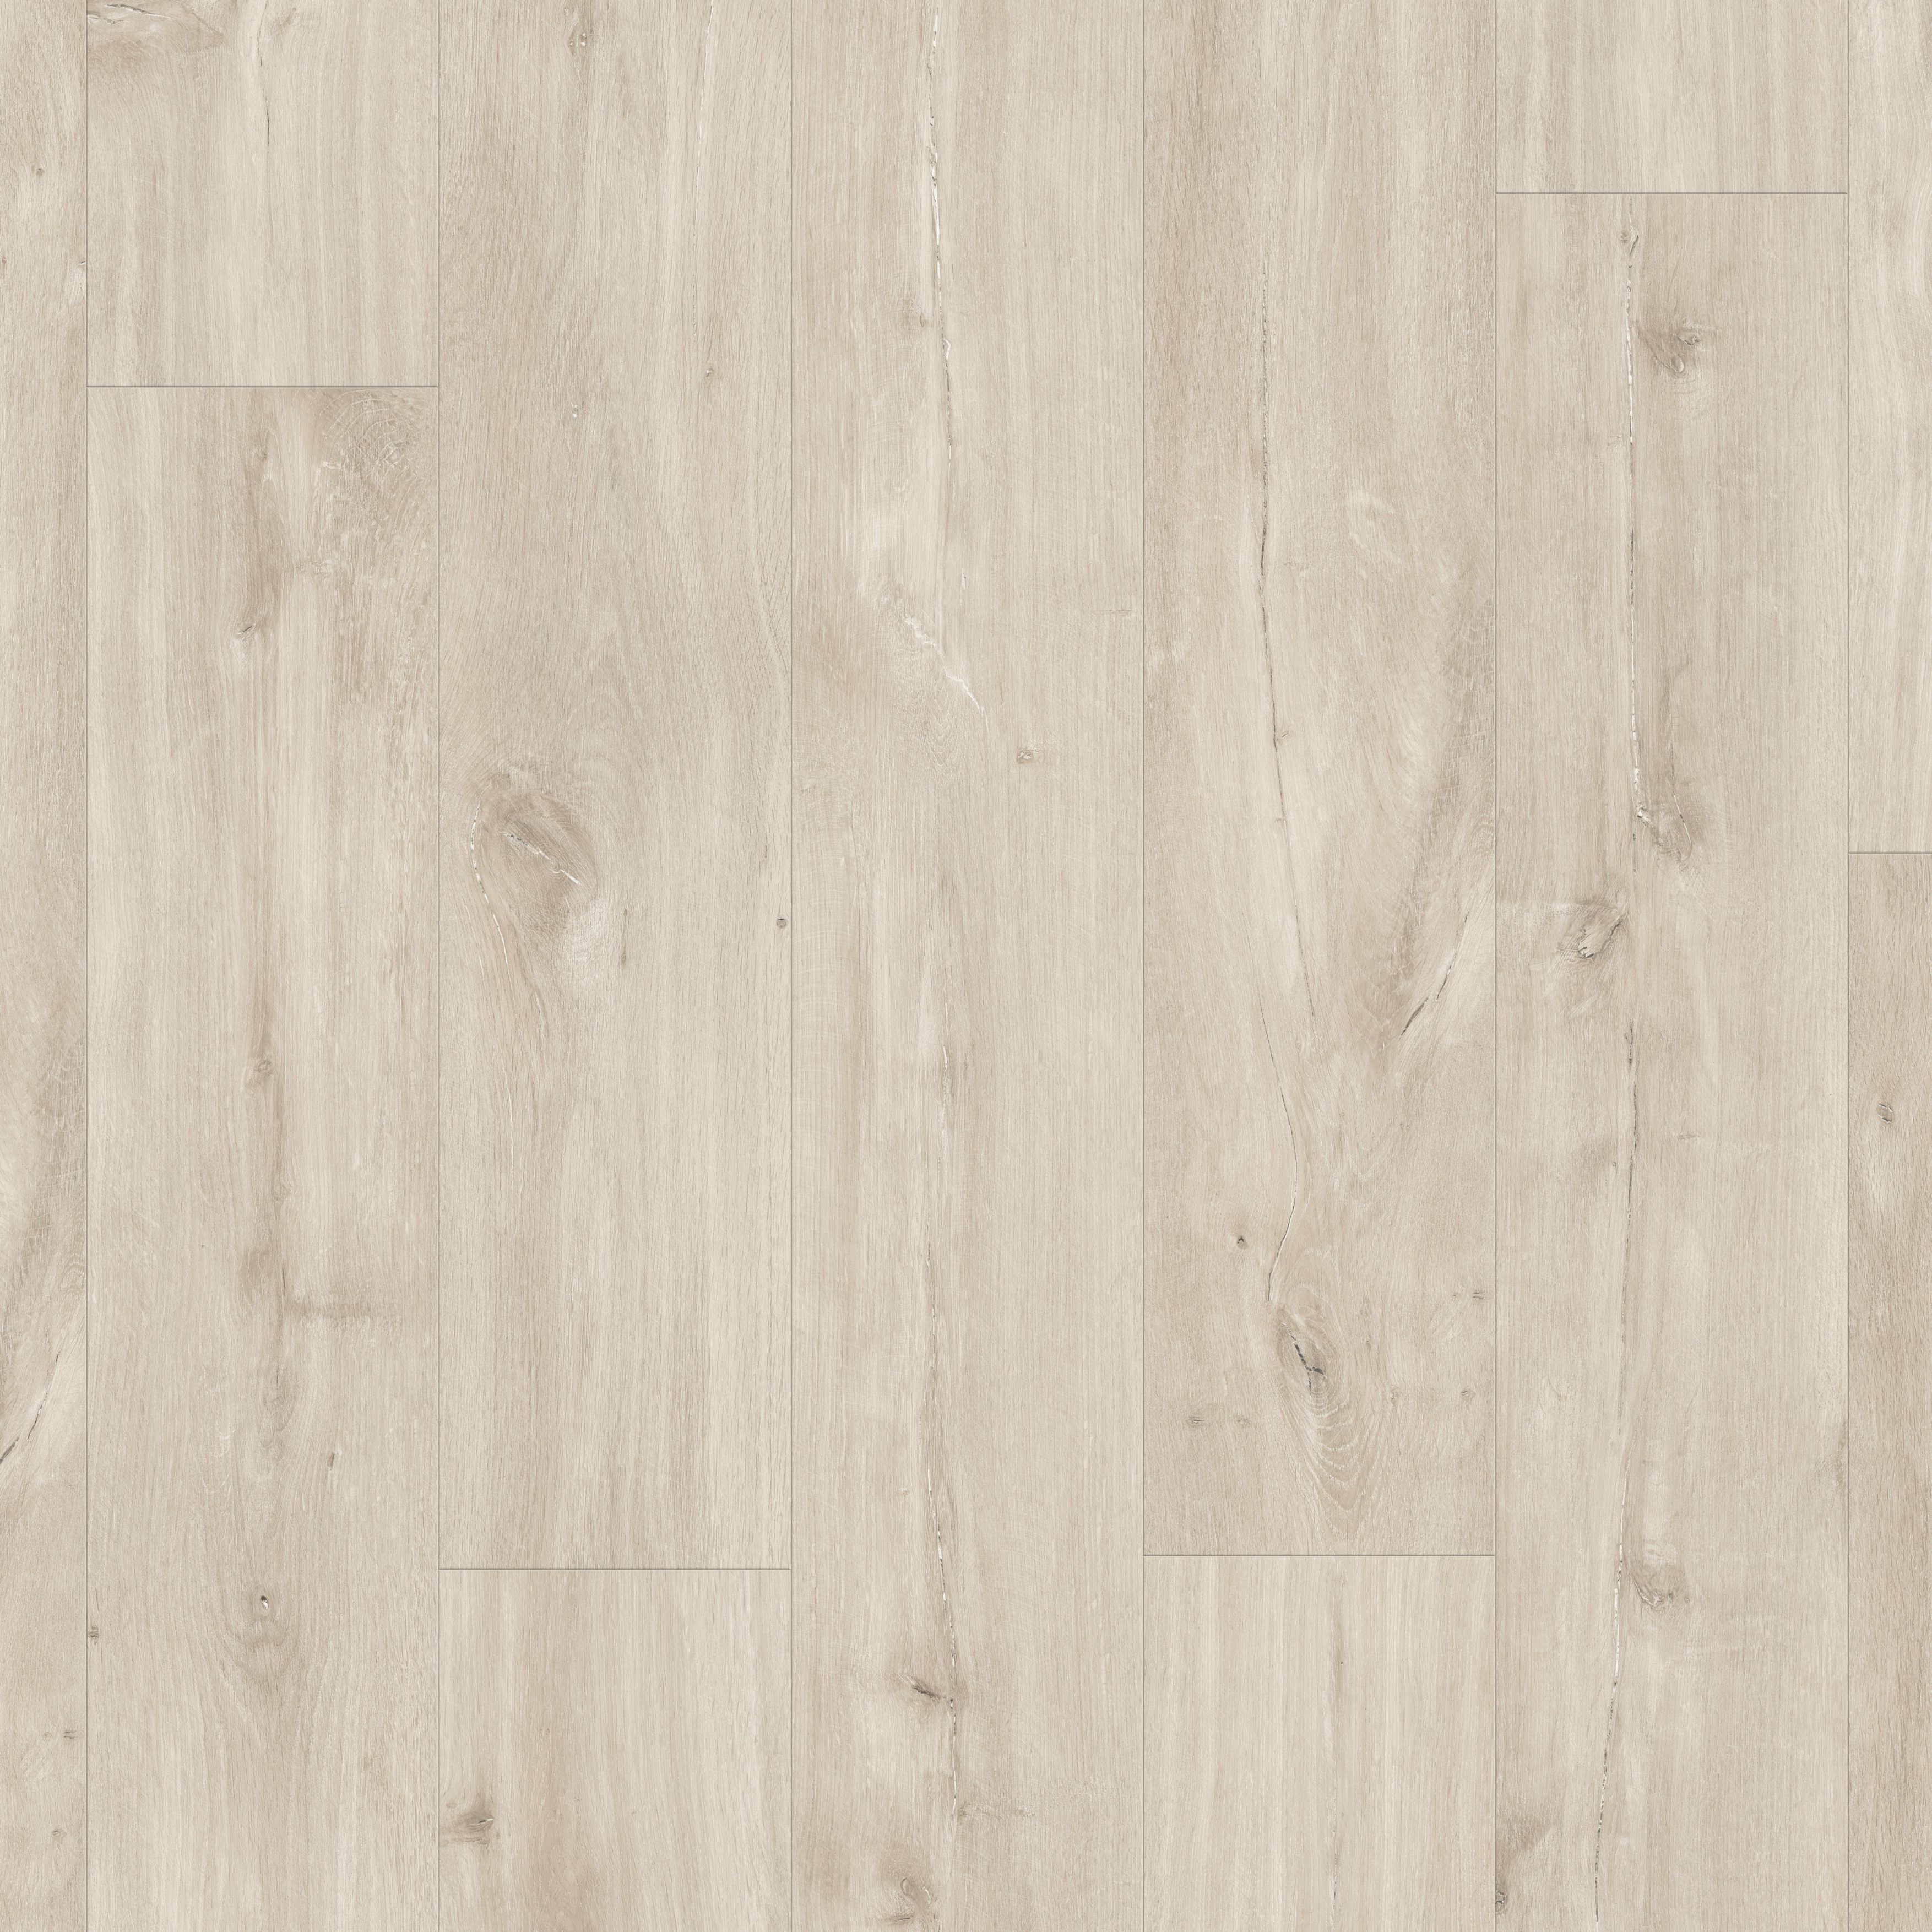 Paso Sand oak Polyvinyl chloride (PVC) Wood effect Luxury vinyl click Flooring Sample